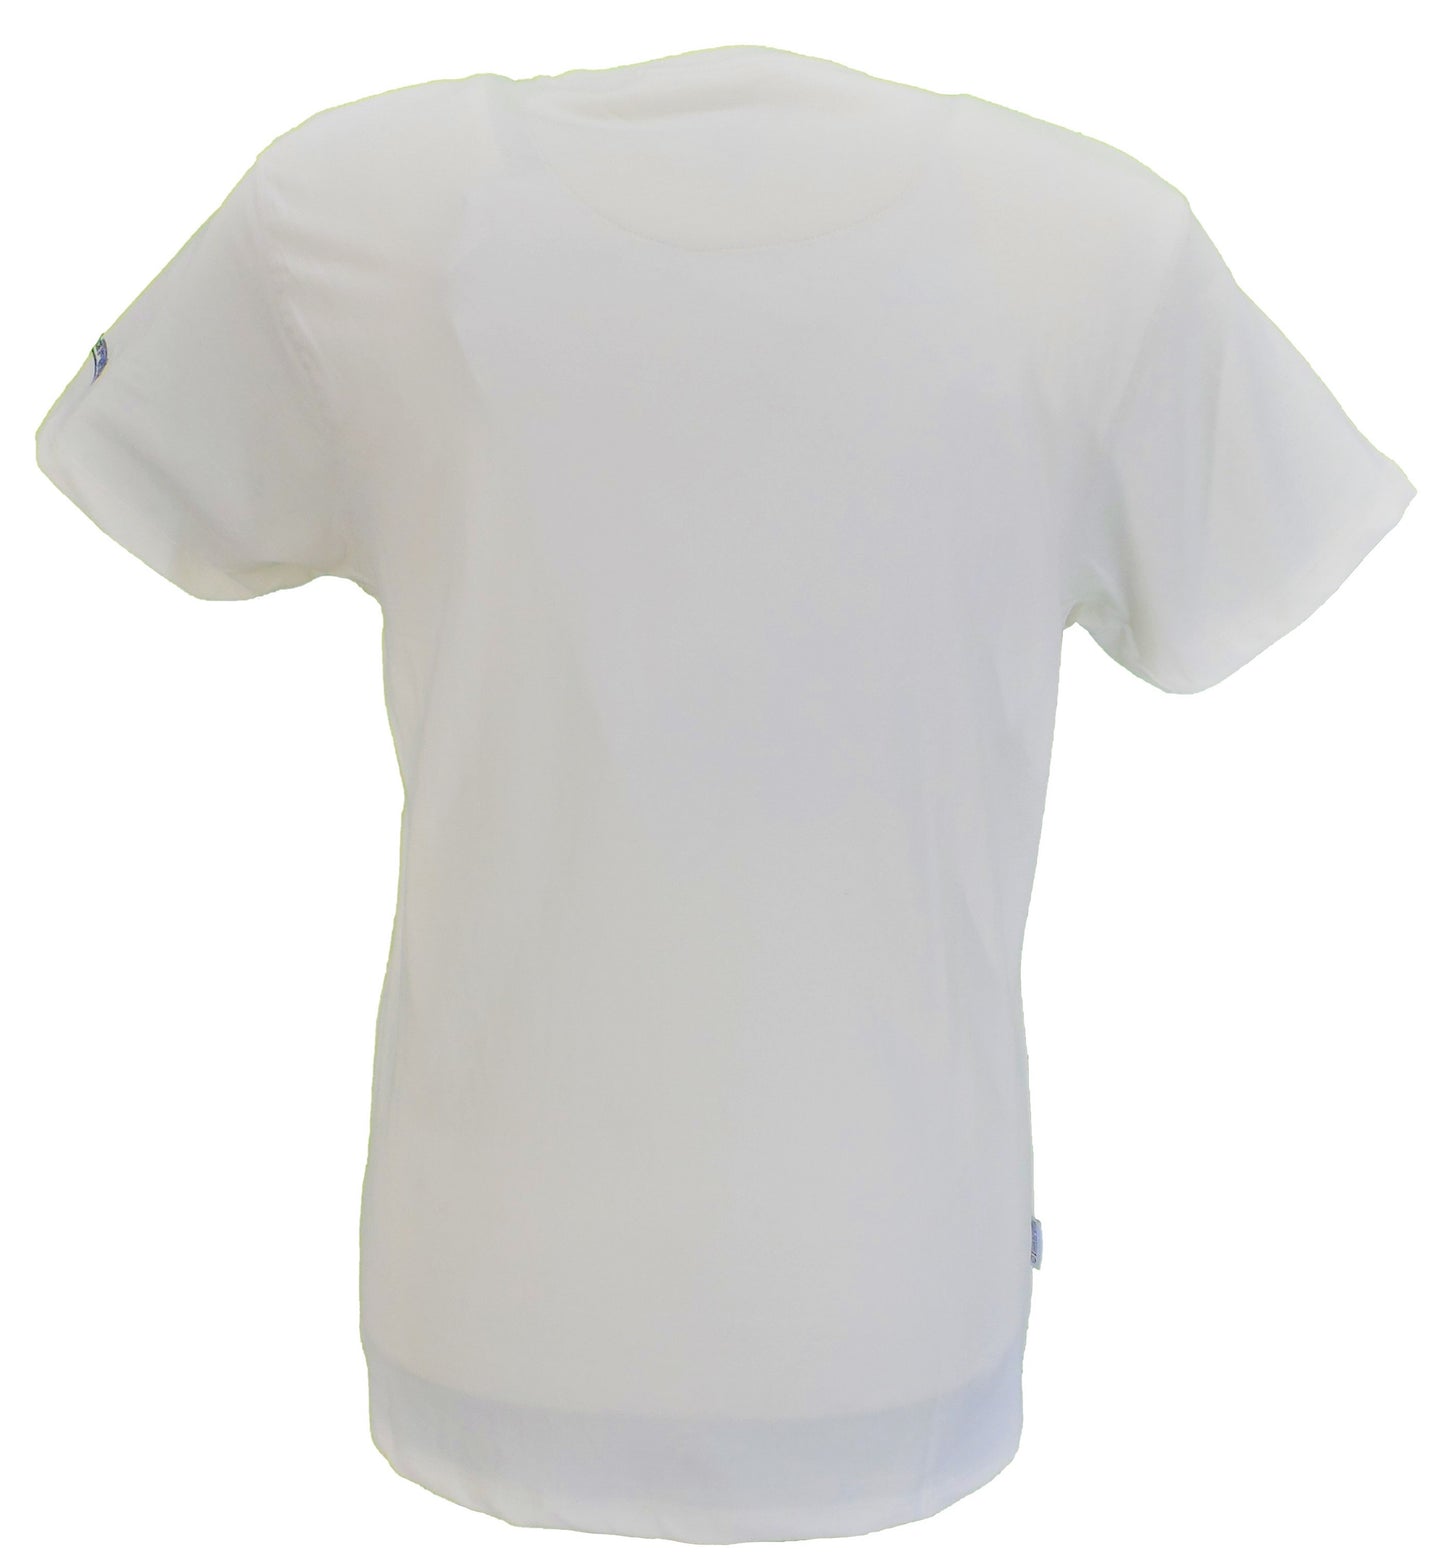 Lambretta camiseta blanca con guitarra retro para hombre